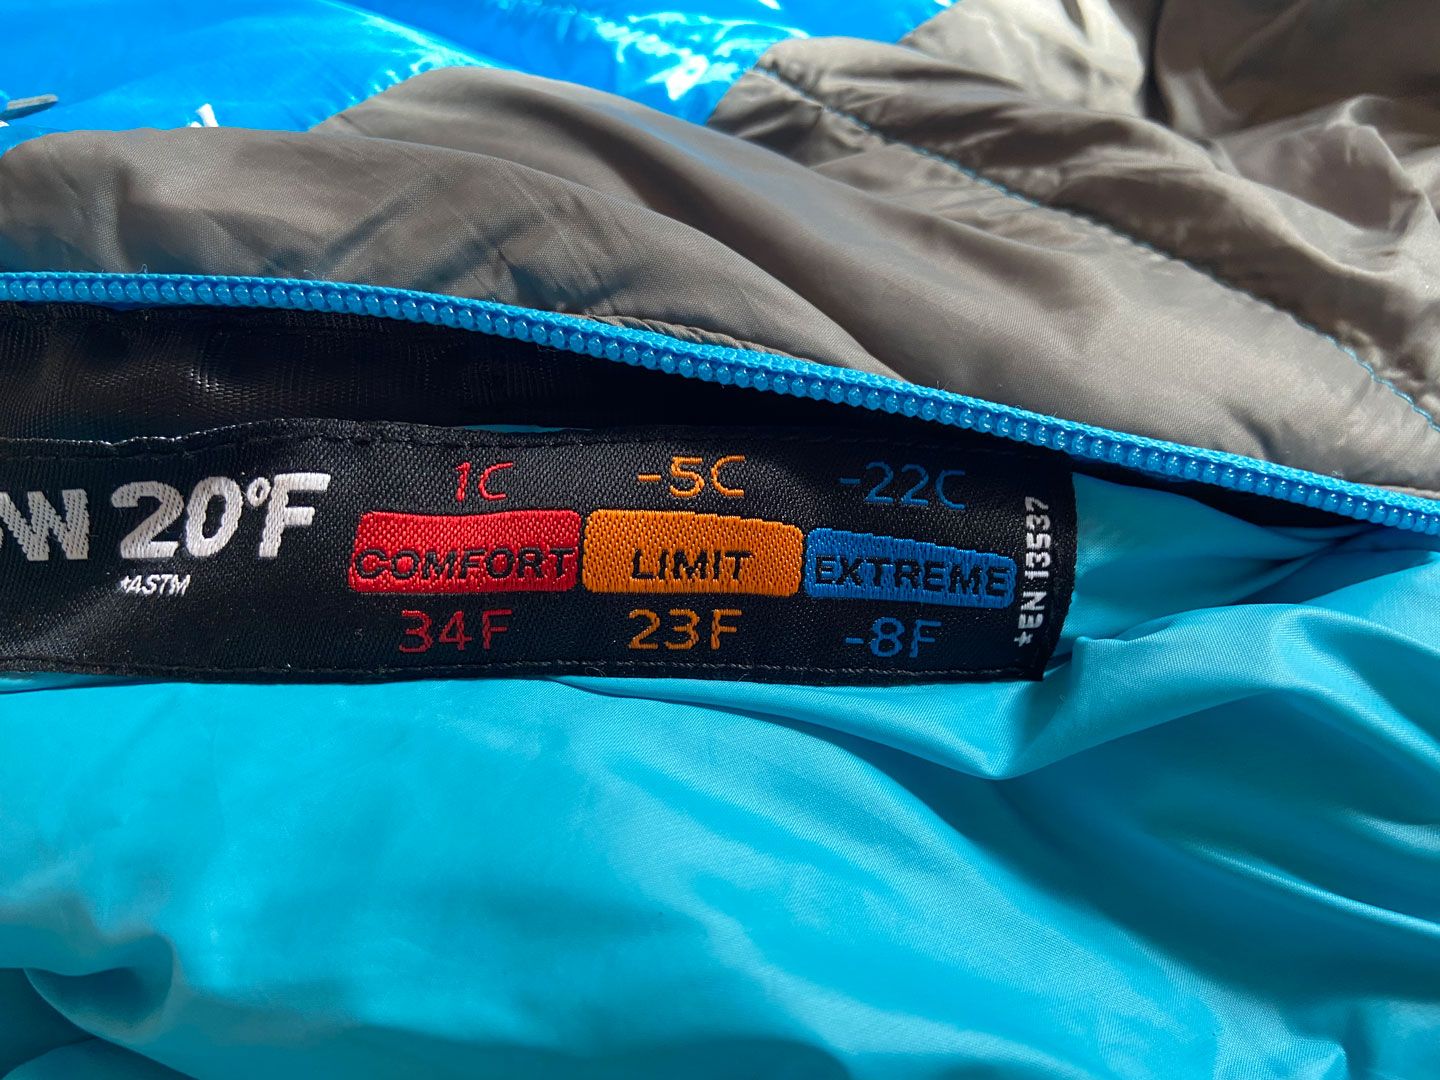 Backpacking sleeping bag temperature label